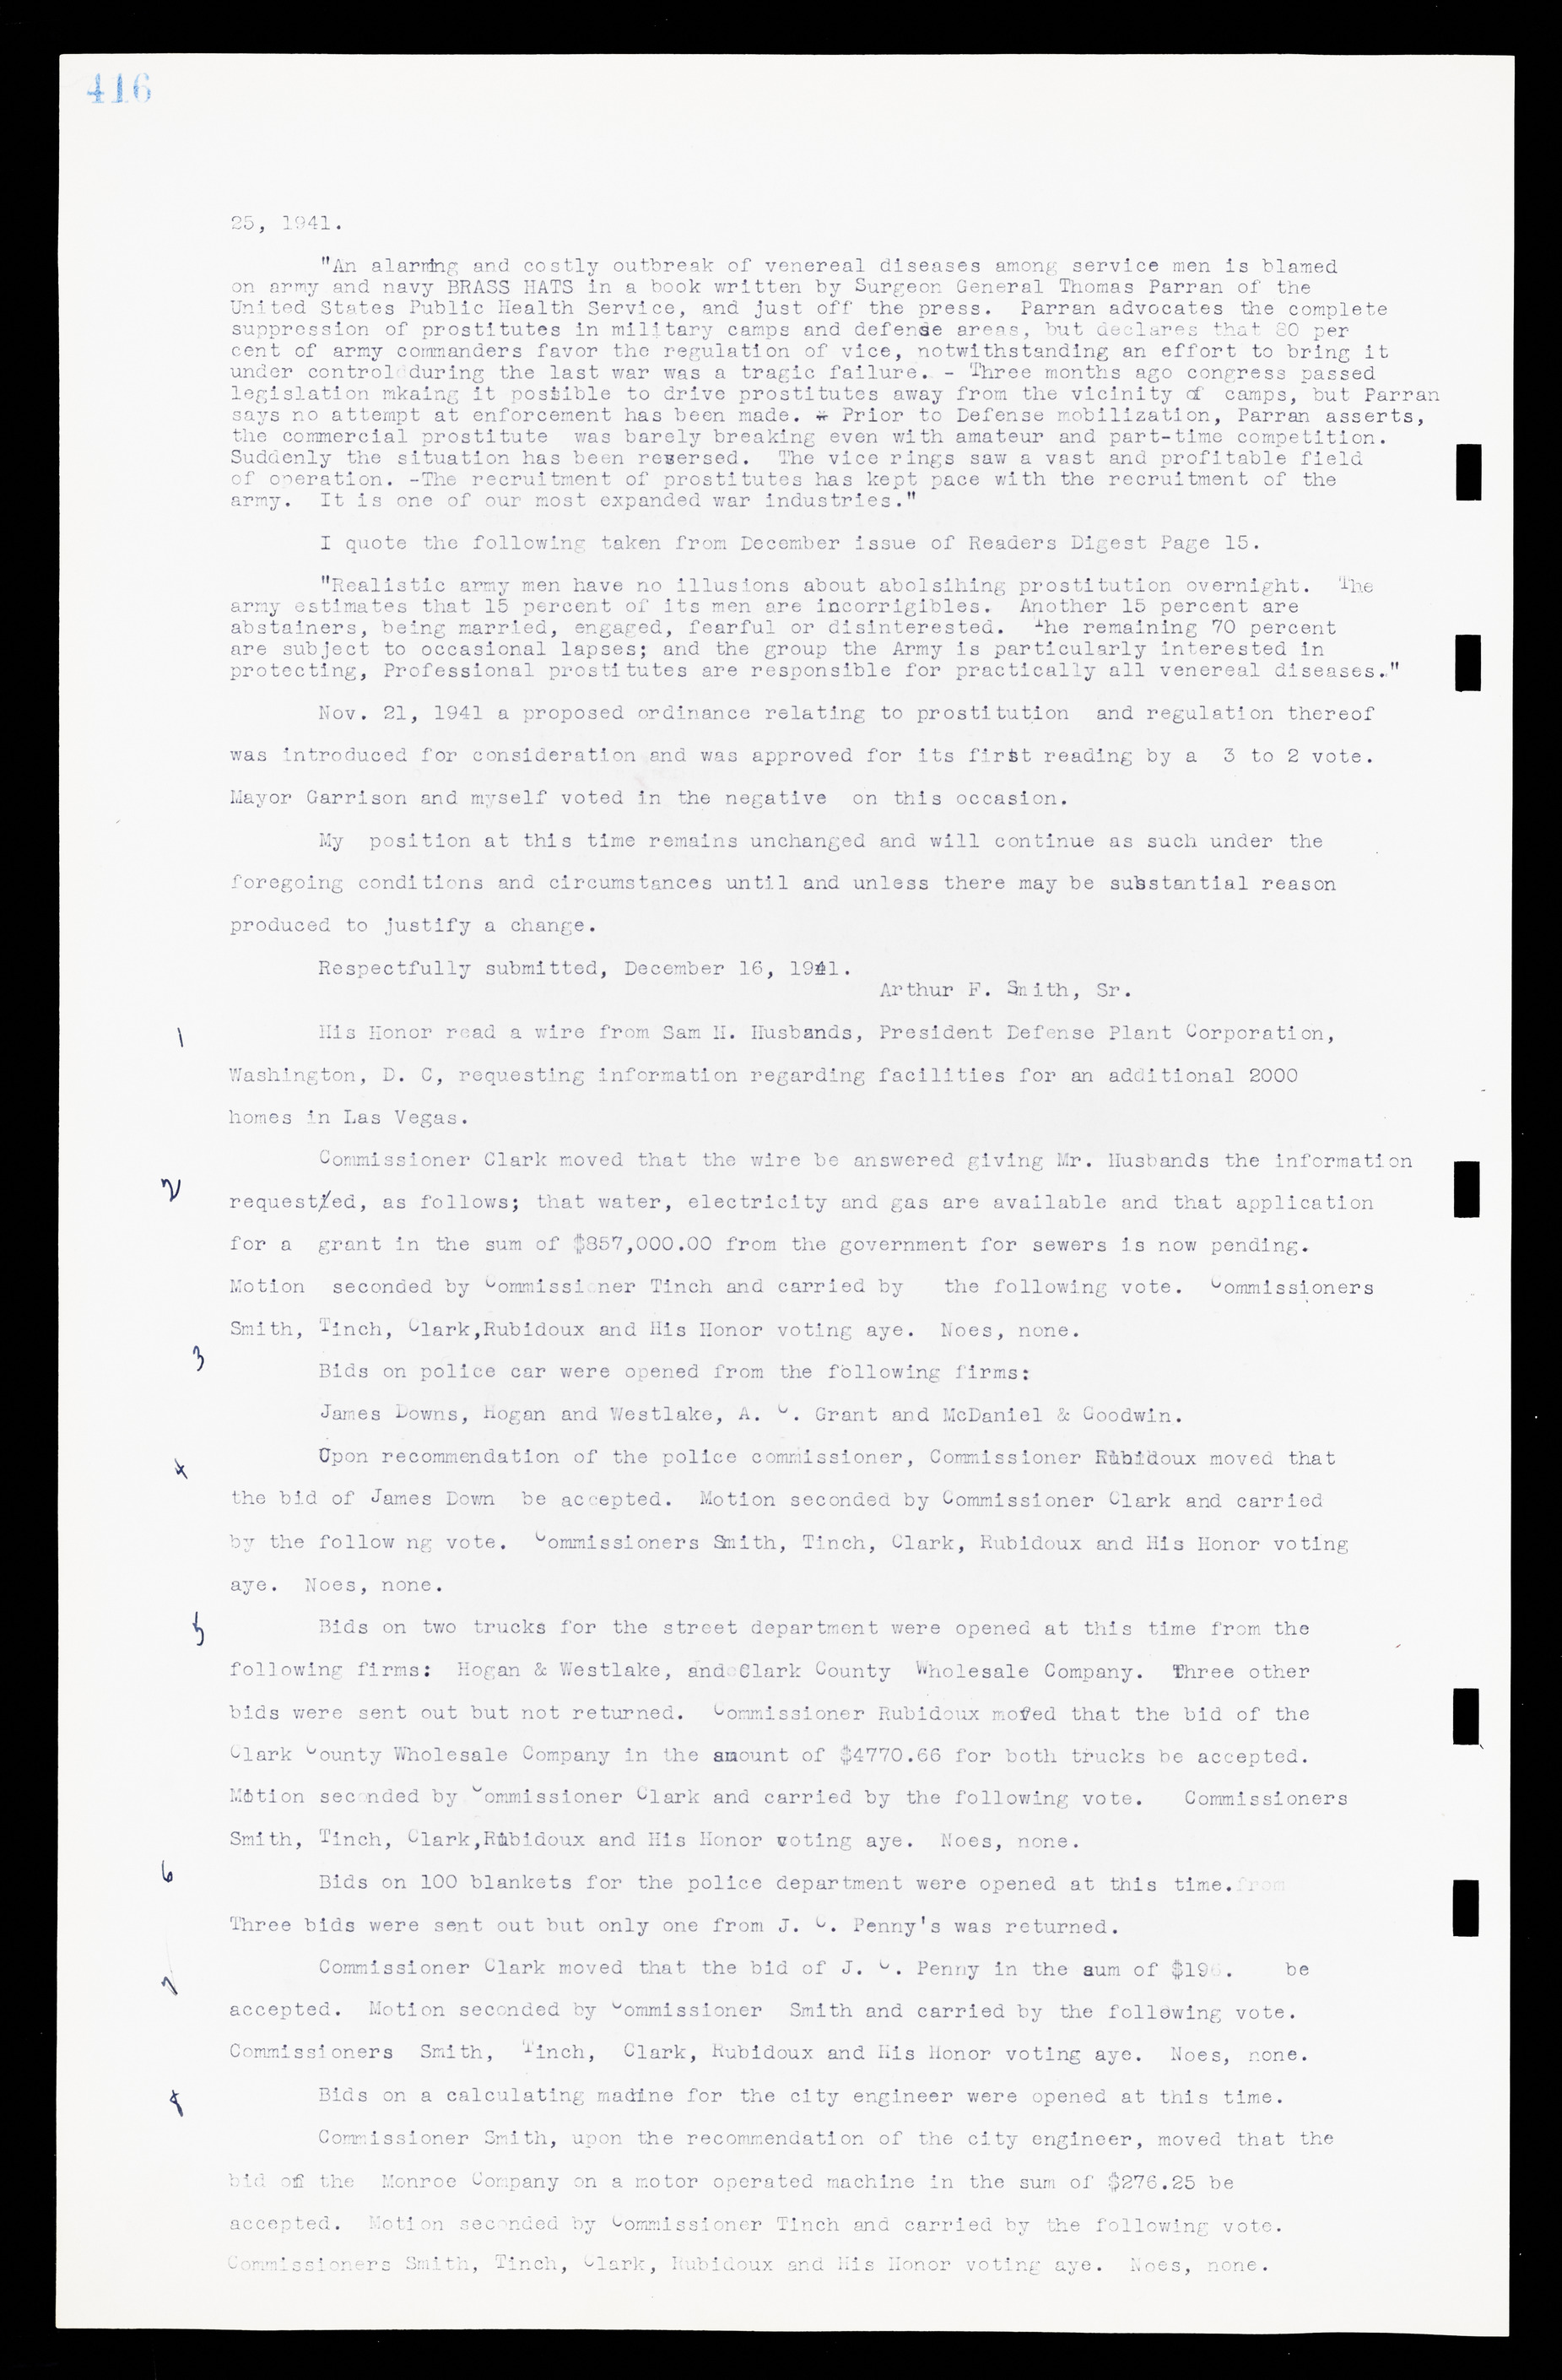 Las Vegas City Commission Minutes, February 17, 1937 to August 4, 1942, lvc000004-442